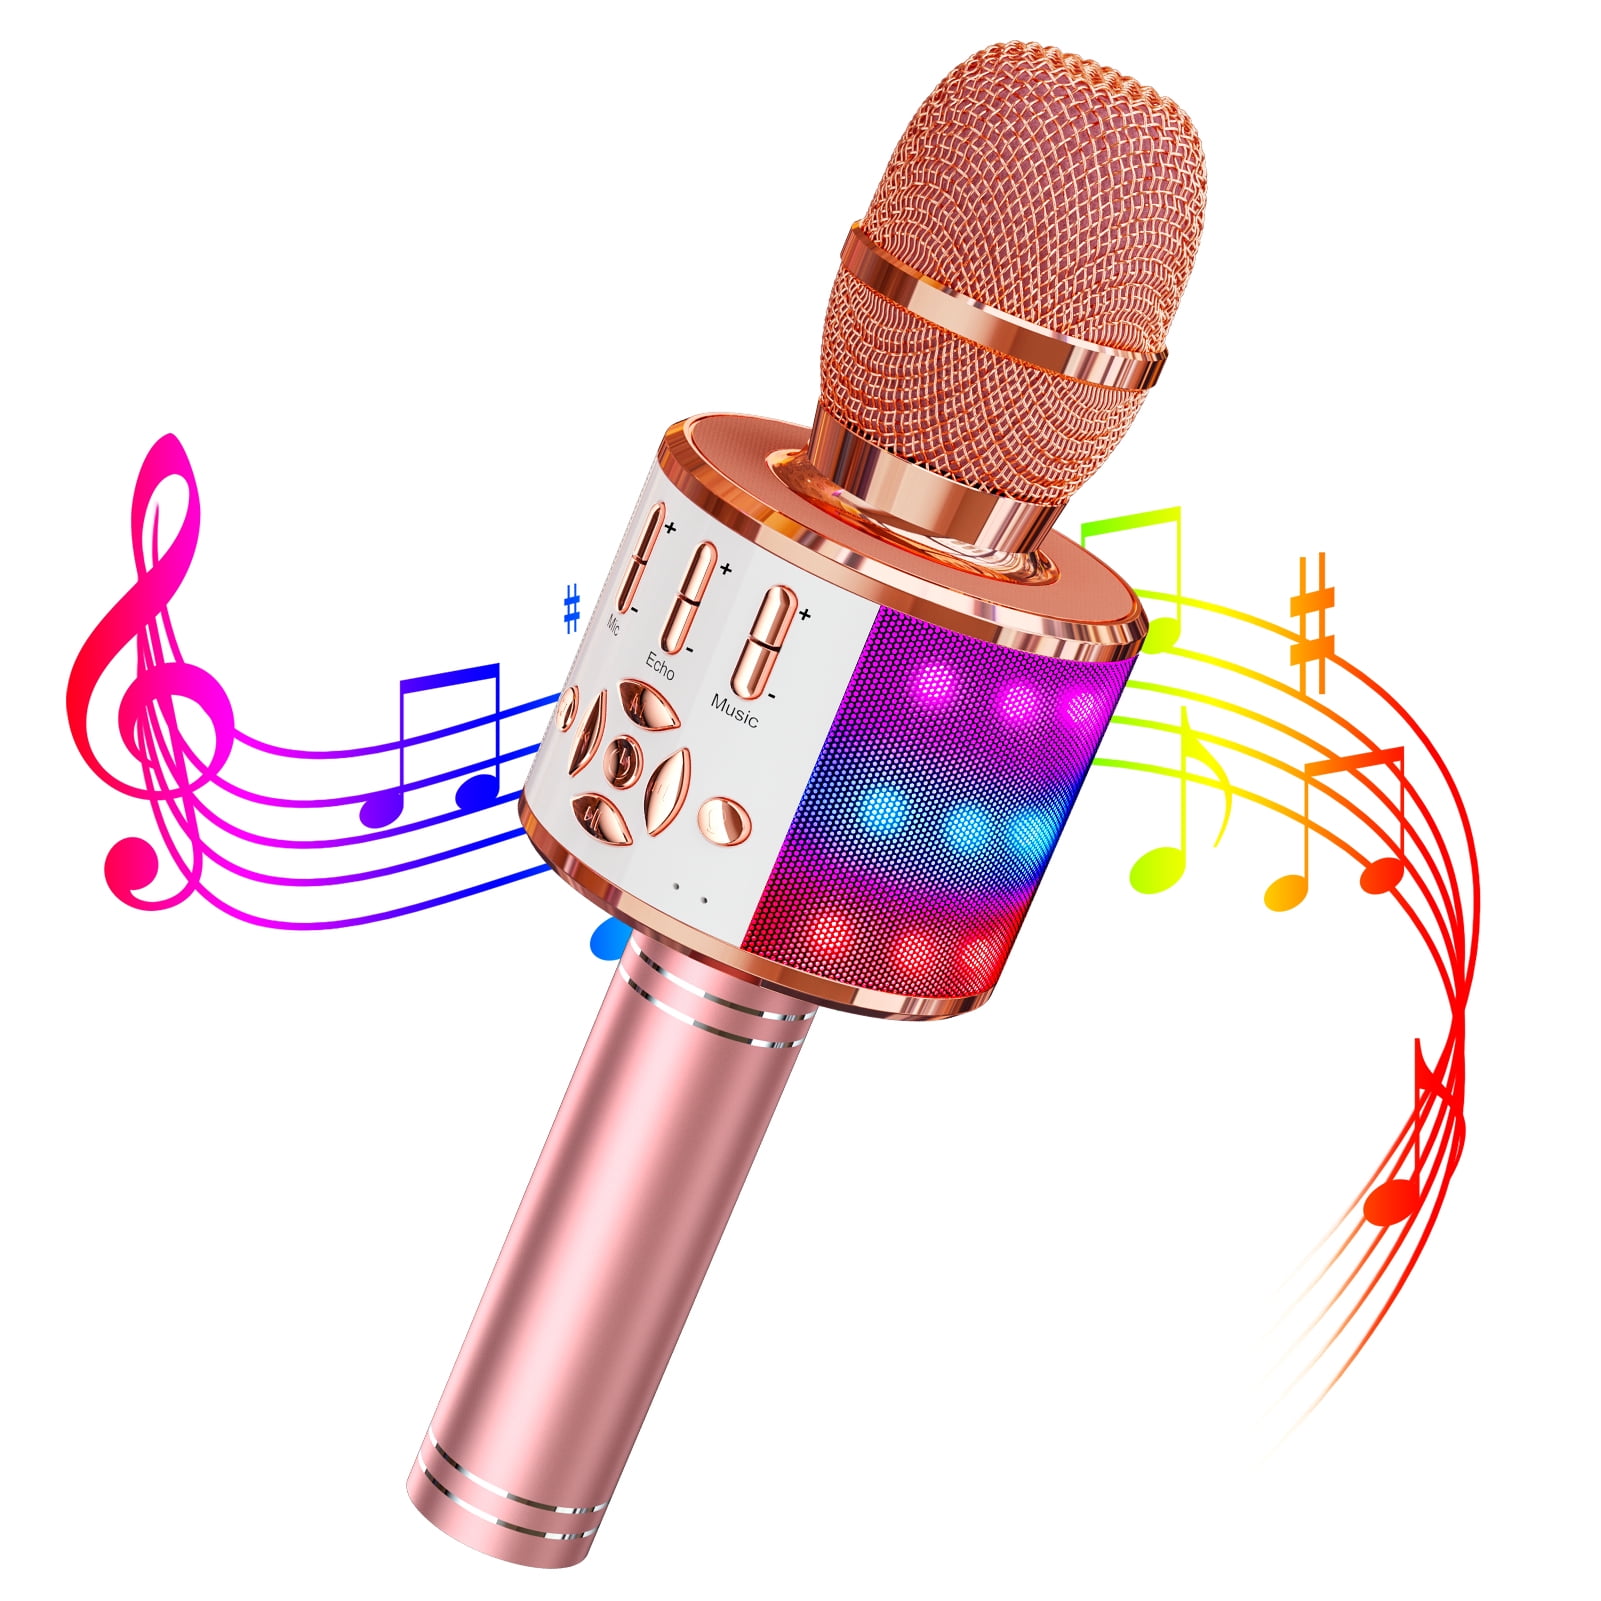 Anboves WS-858L Wireless Bluetooth Microphone Karaoke Handheld